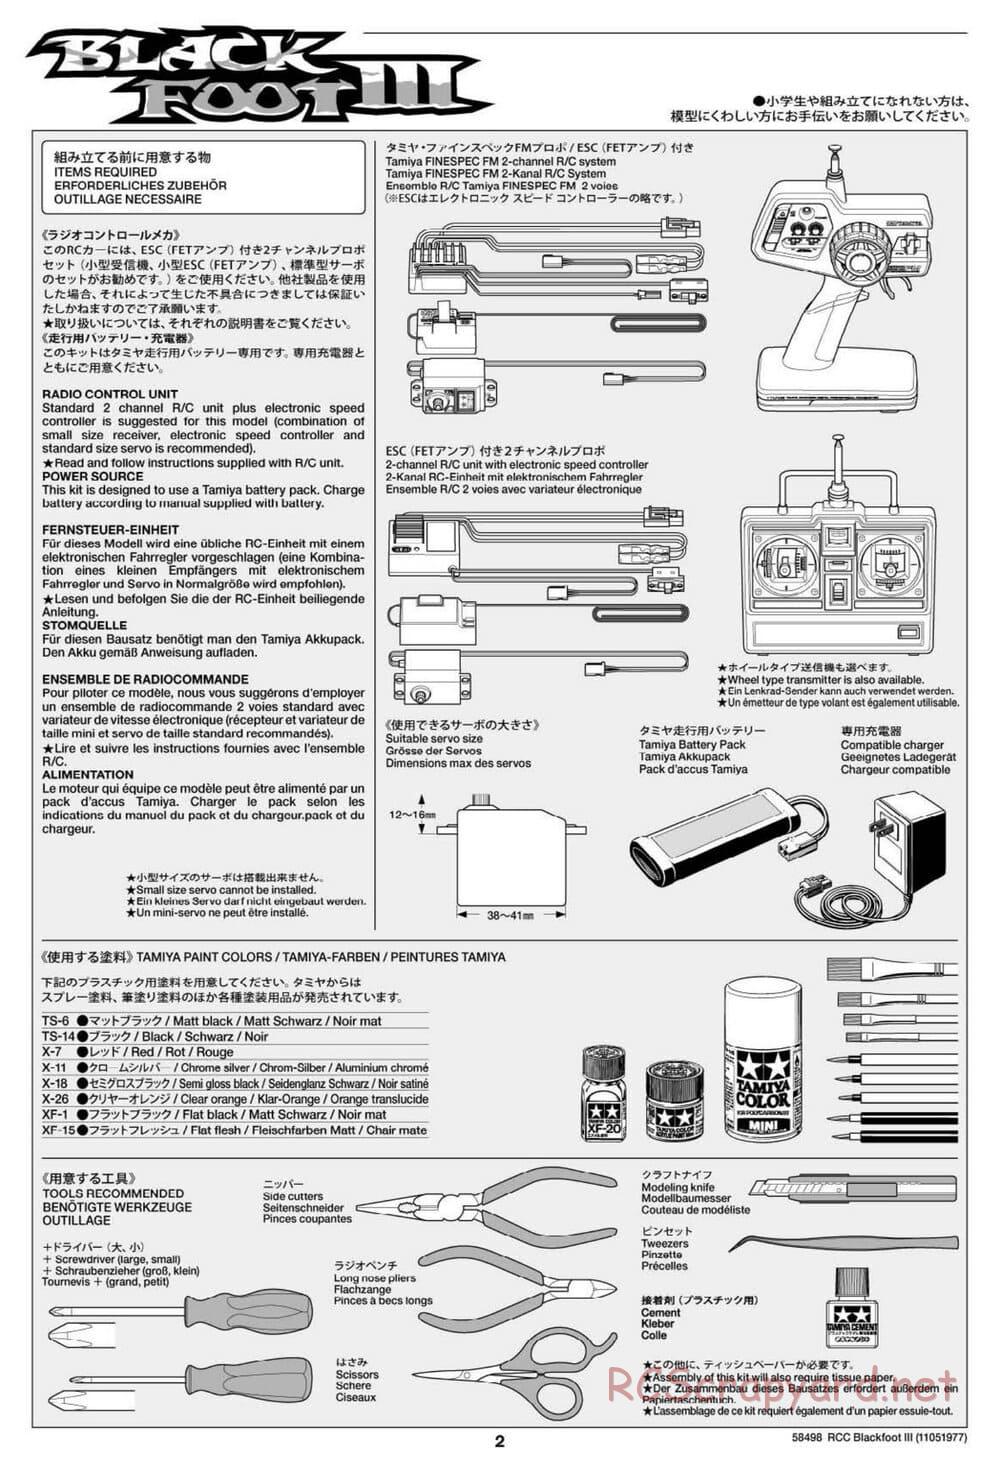 Tamiya - Blackfoot III - WT-01 Chassis - Manual - Page 2